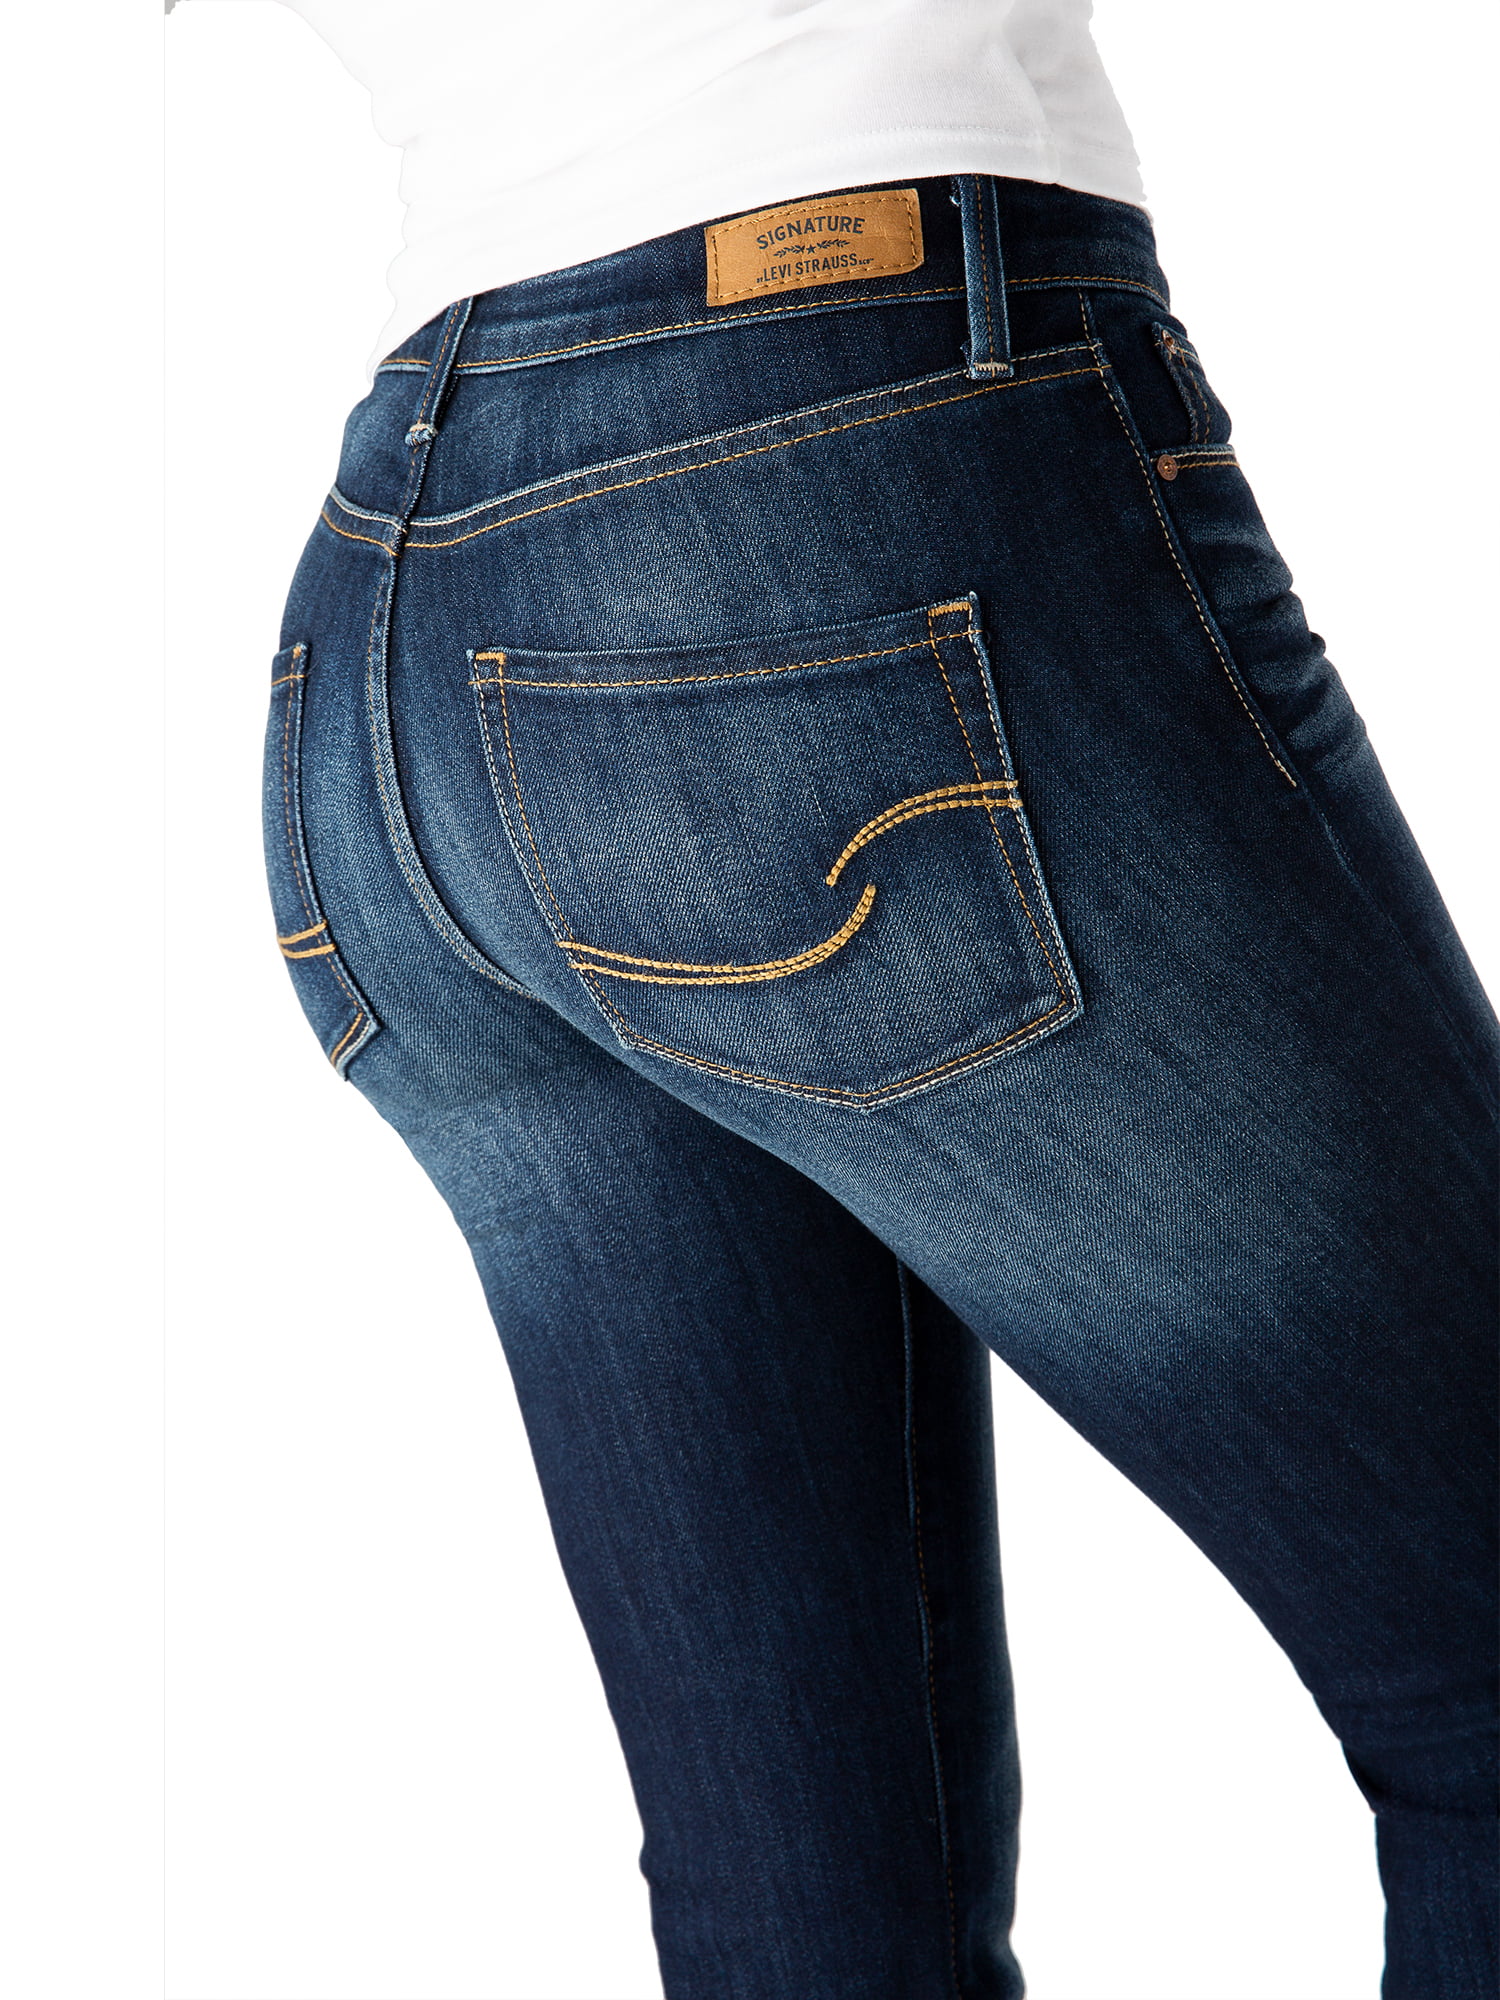 Signature by Levi Strauss & Co. Women's Modern Slim Cuffed Jeans -  